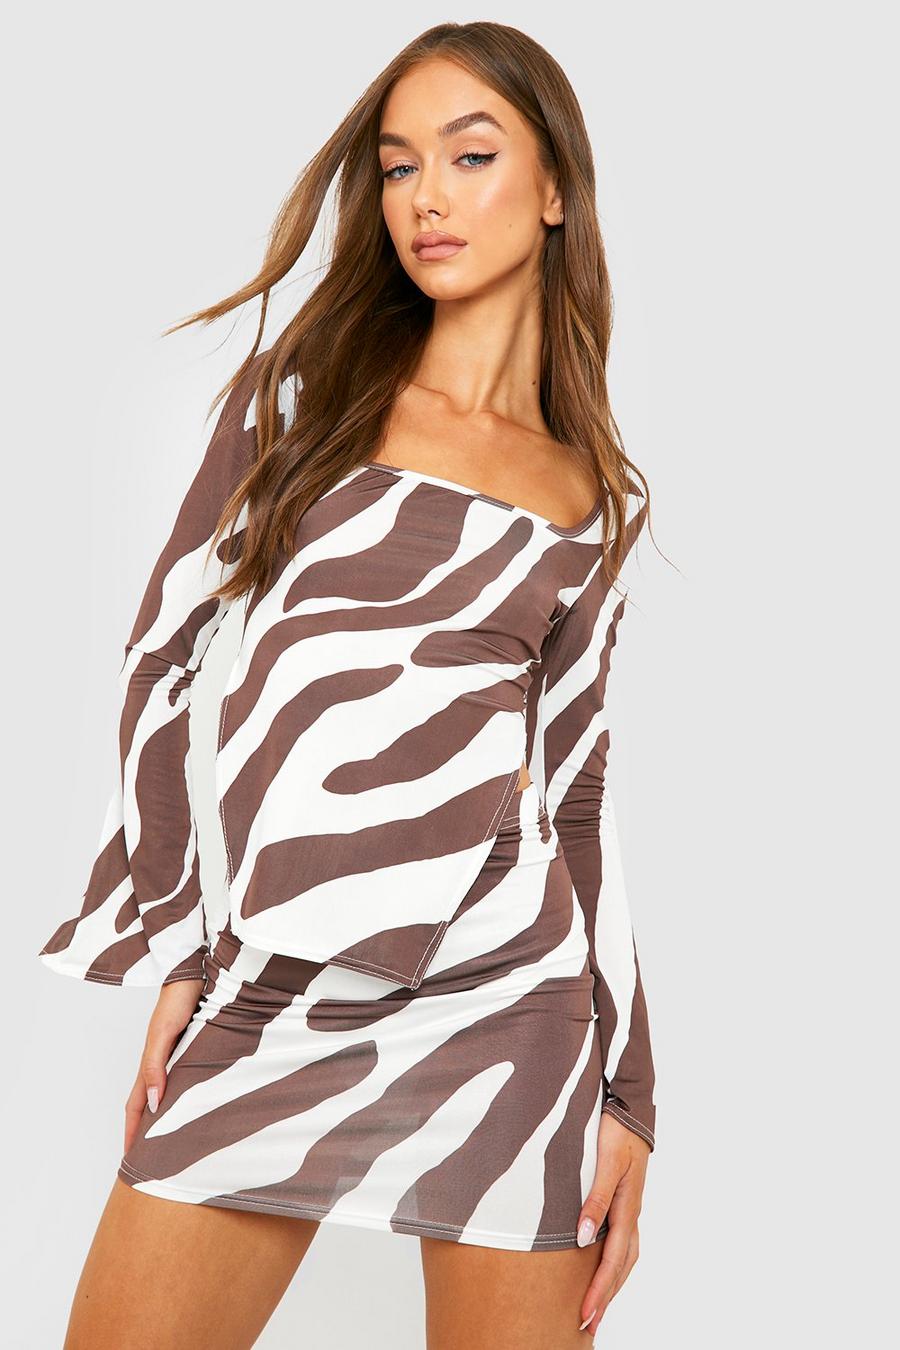 Chocolate marron Zebra Print Mini Skirt